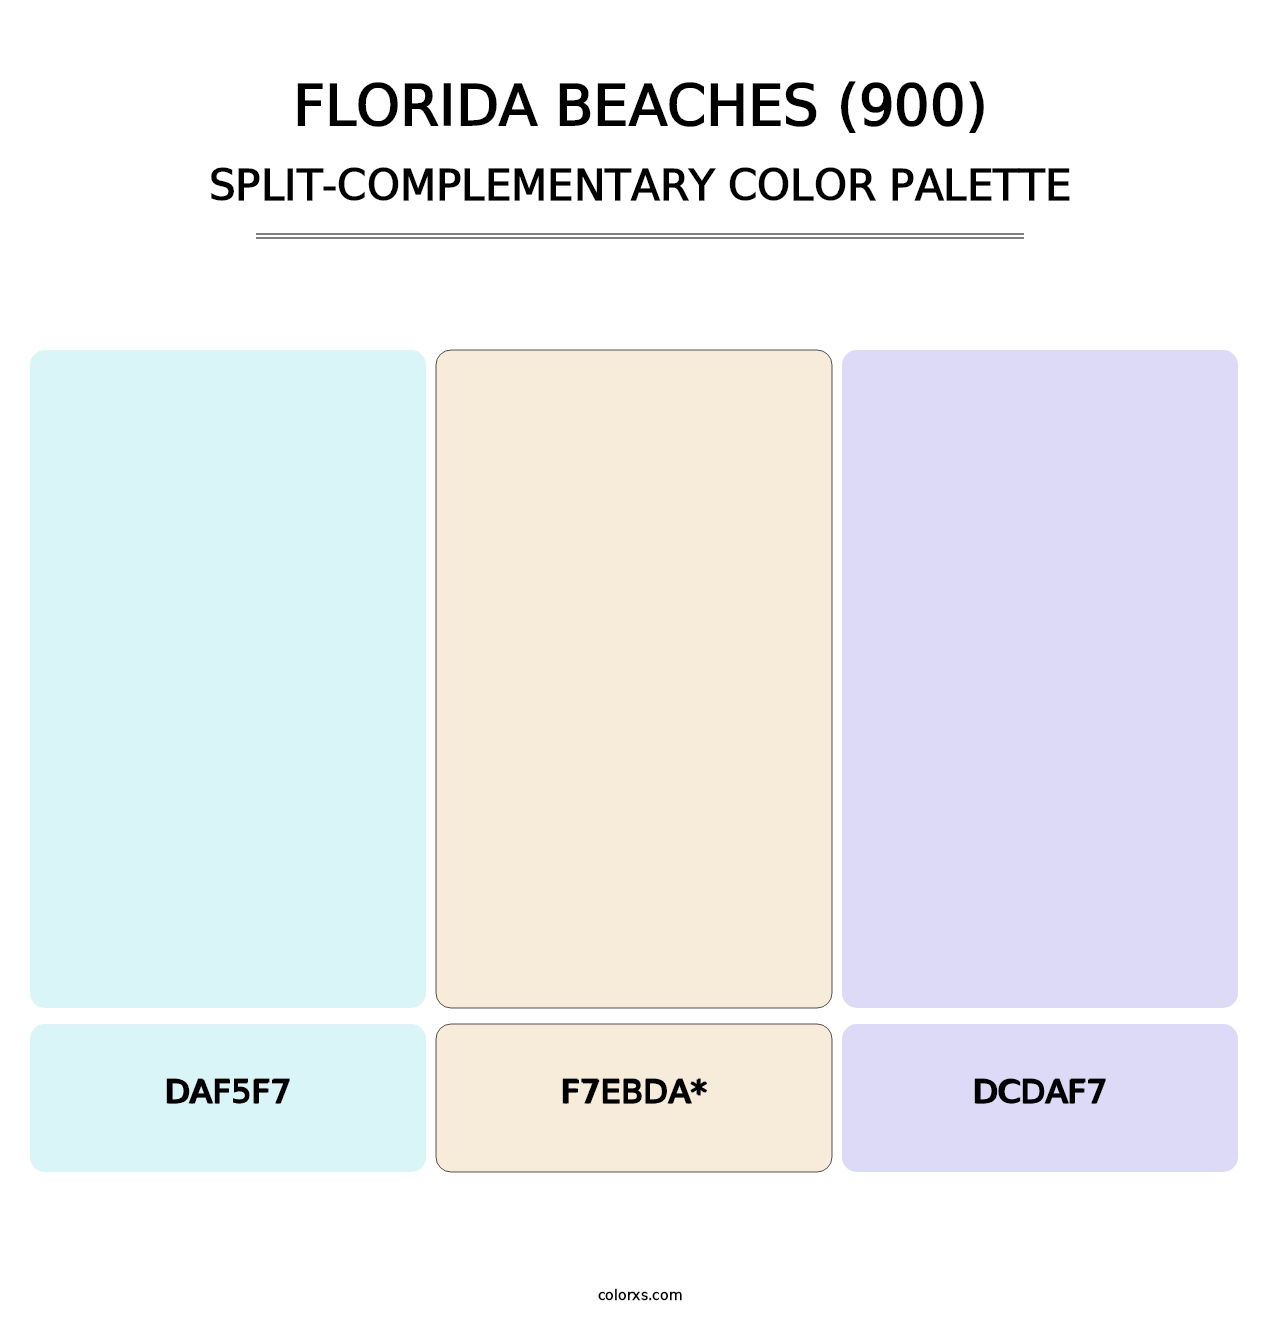 Florida Beaches (900) - Split-Complementary Color Palette